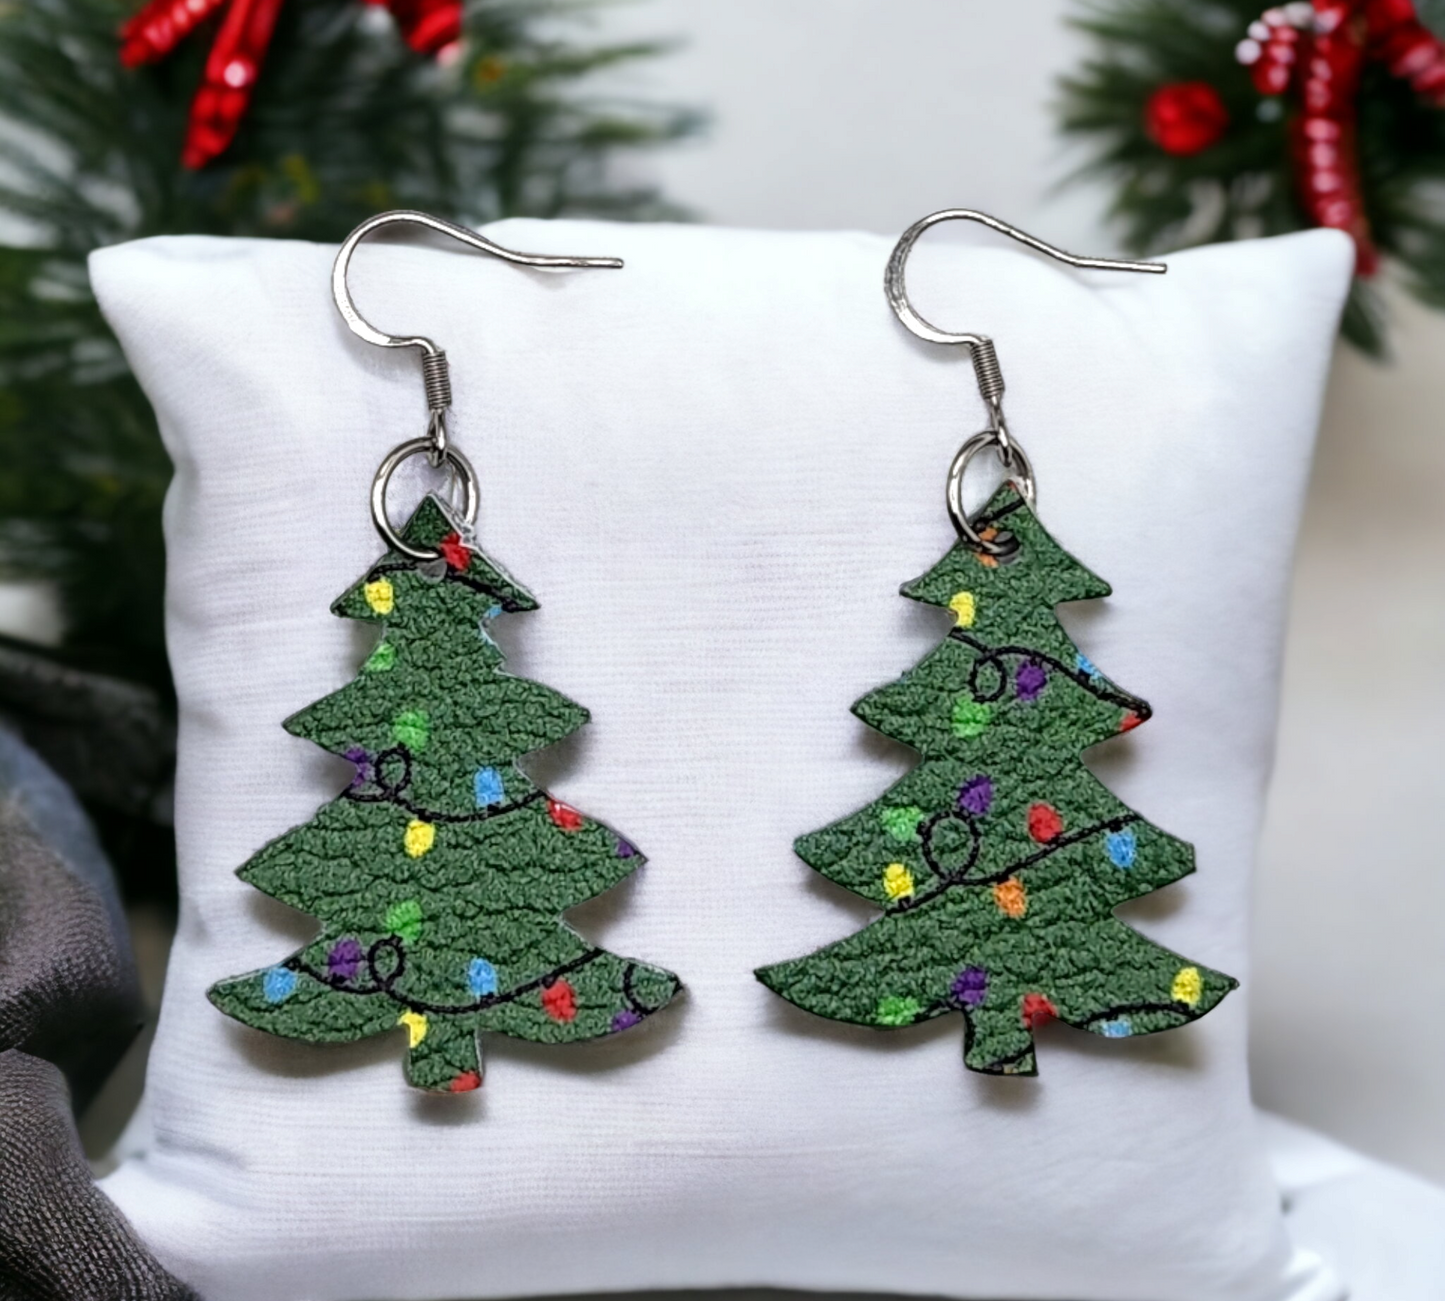 Christmas Light Trees